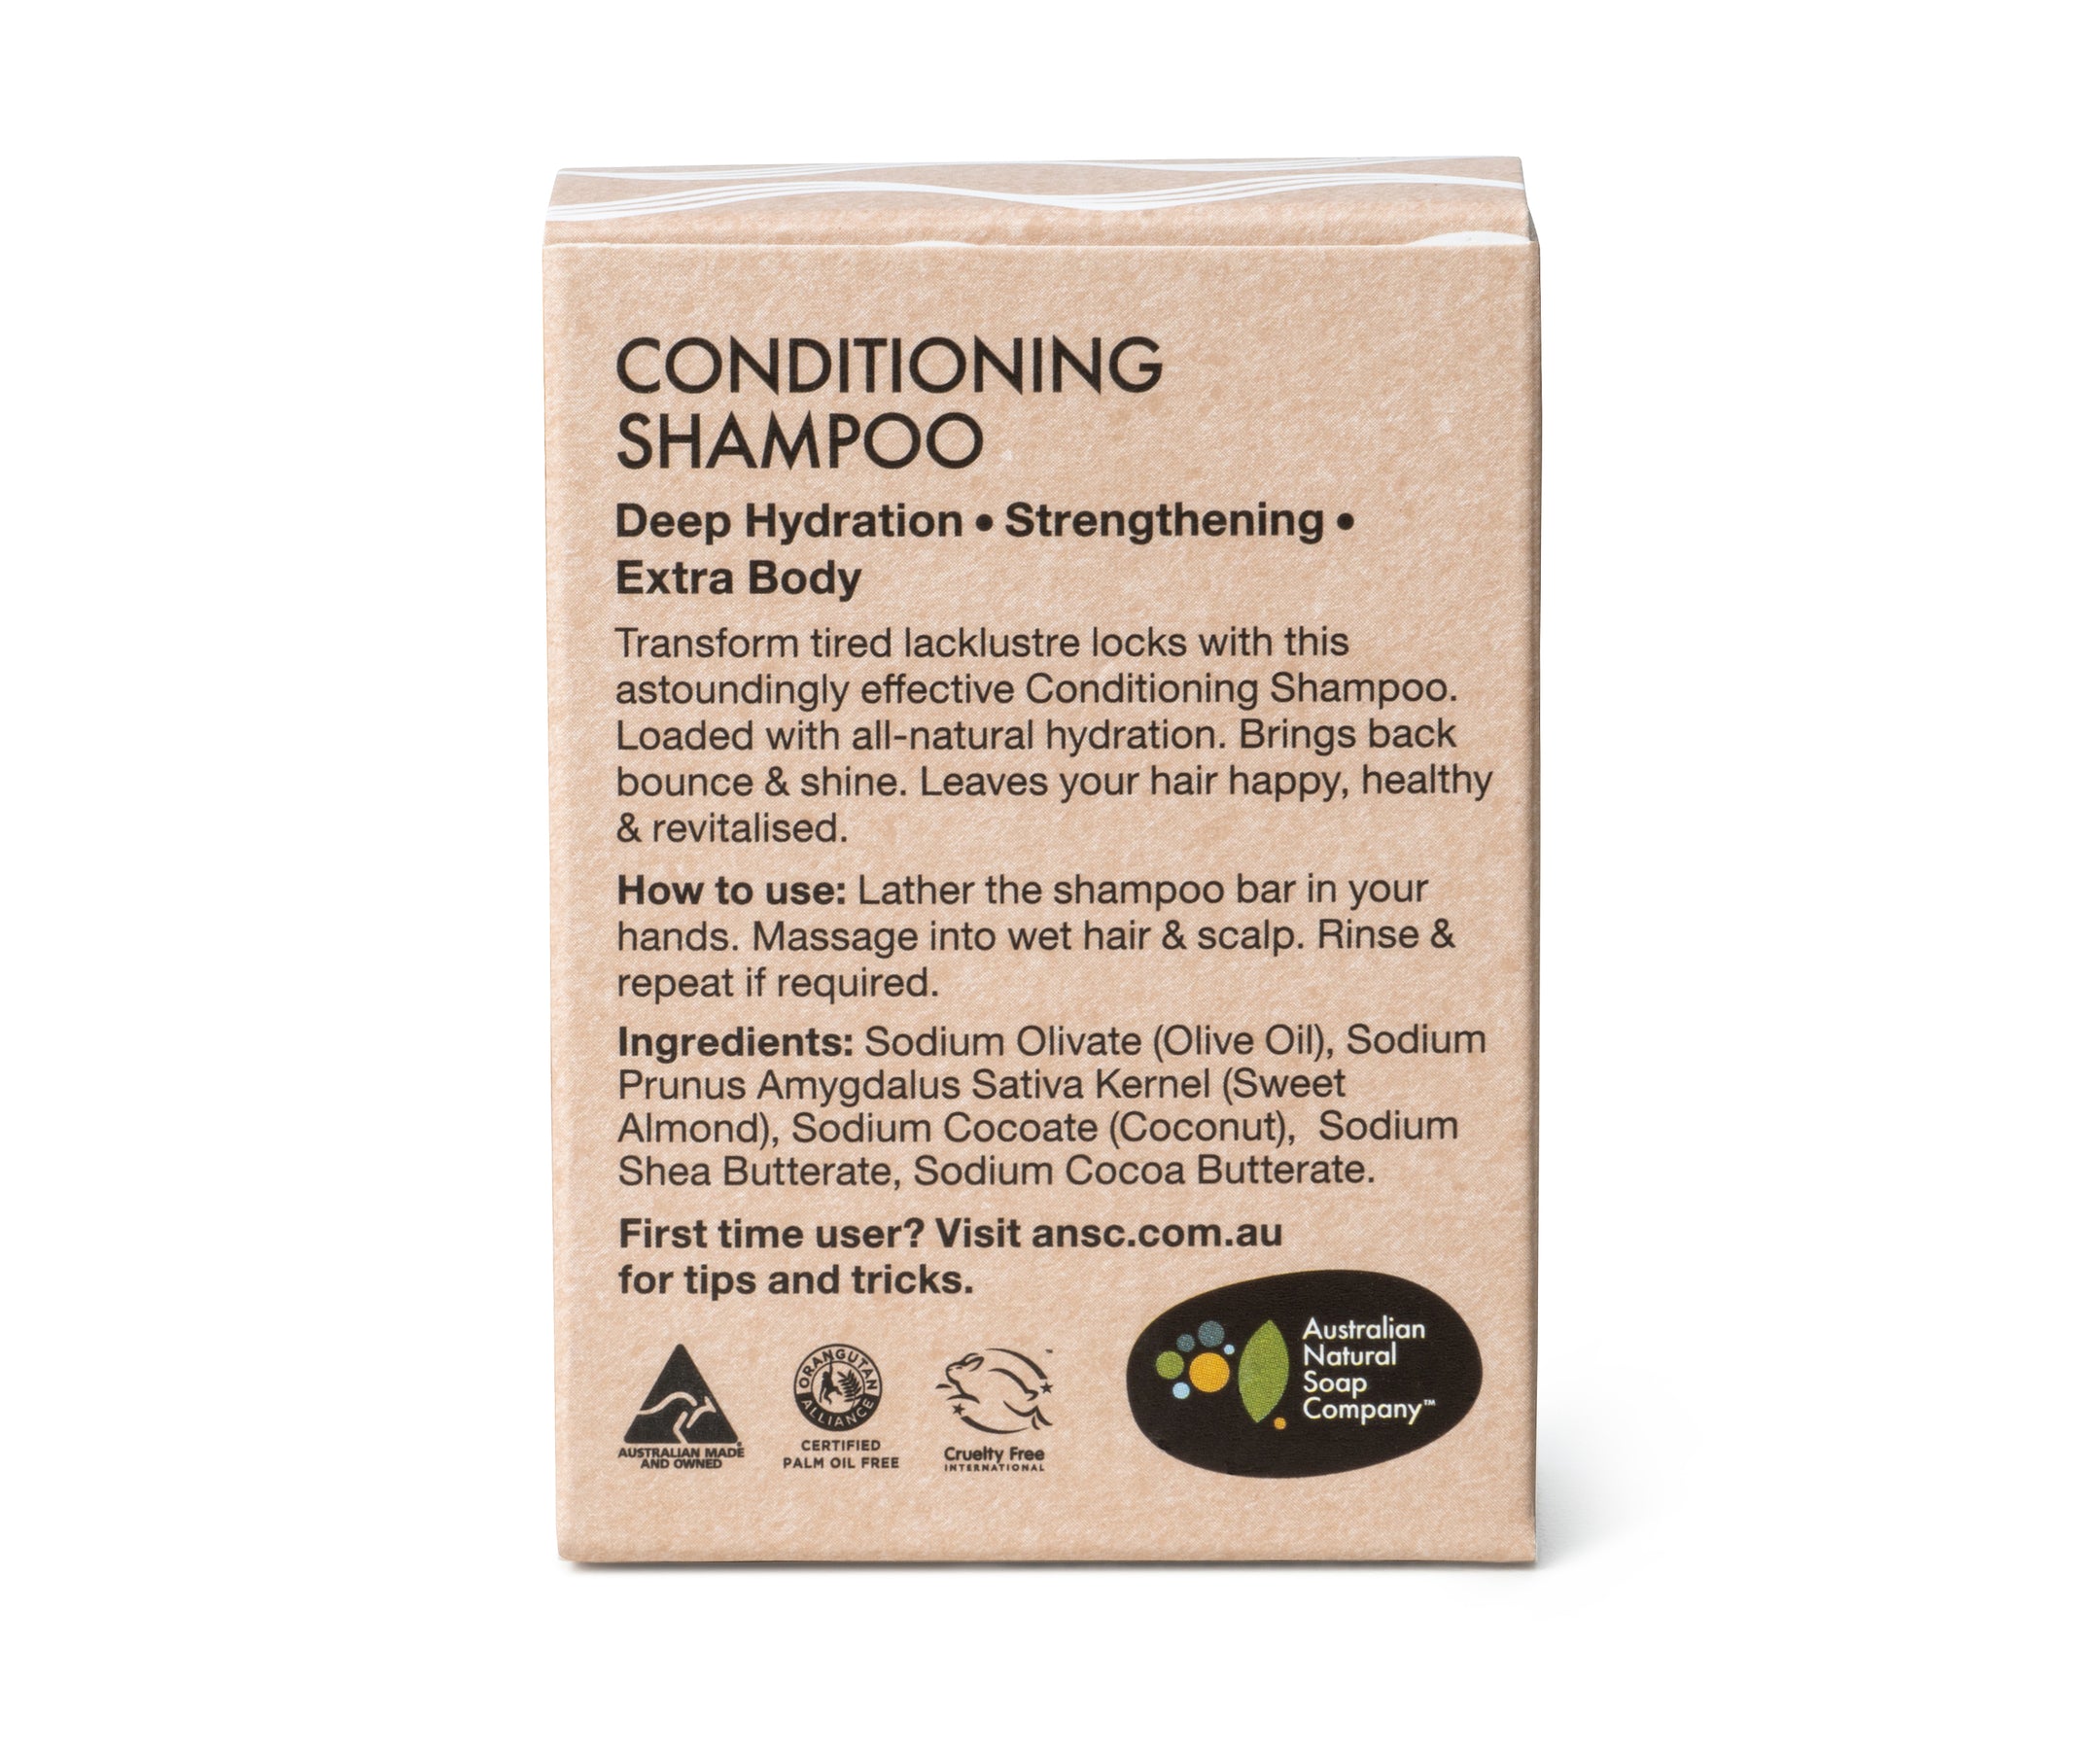 Australian Natural Soap Company conditioning shampoo bar back of box